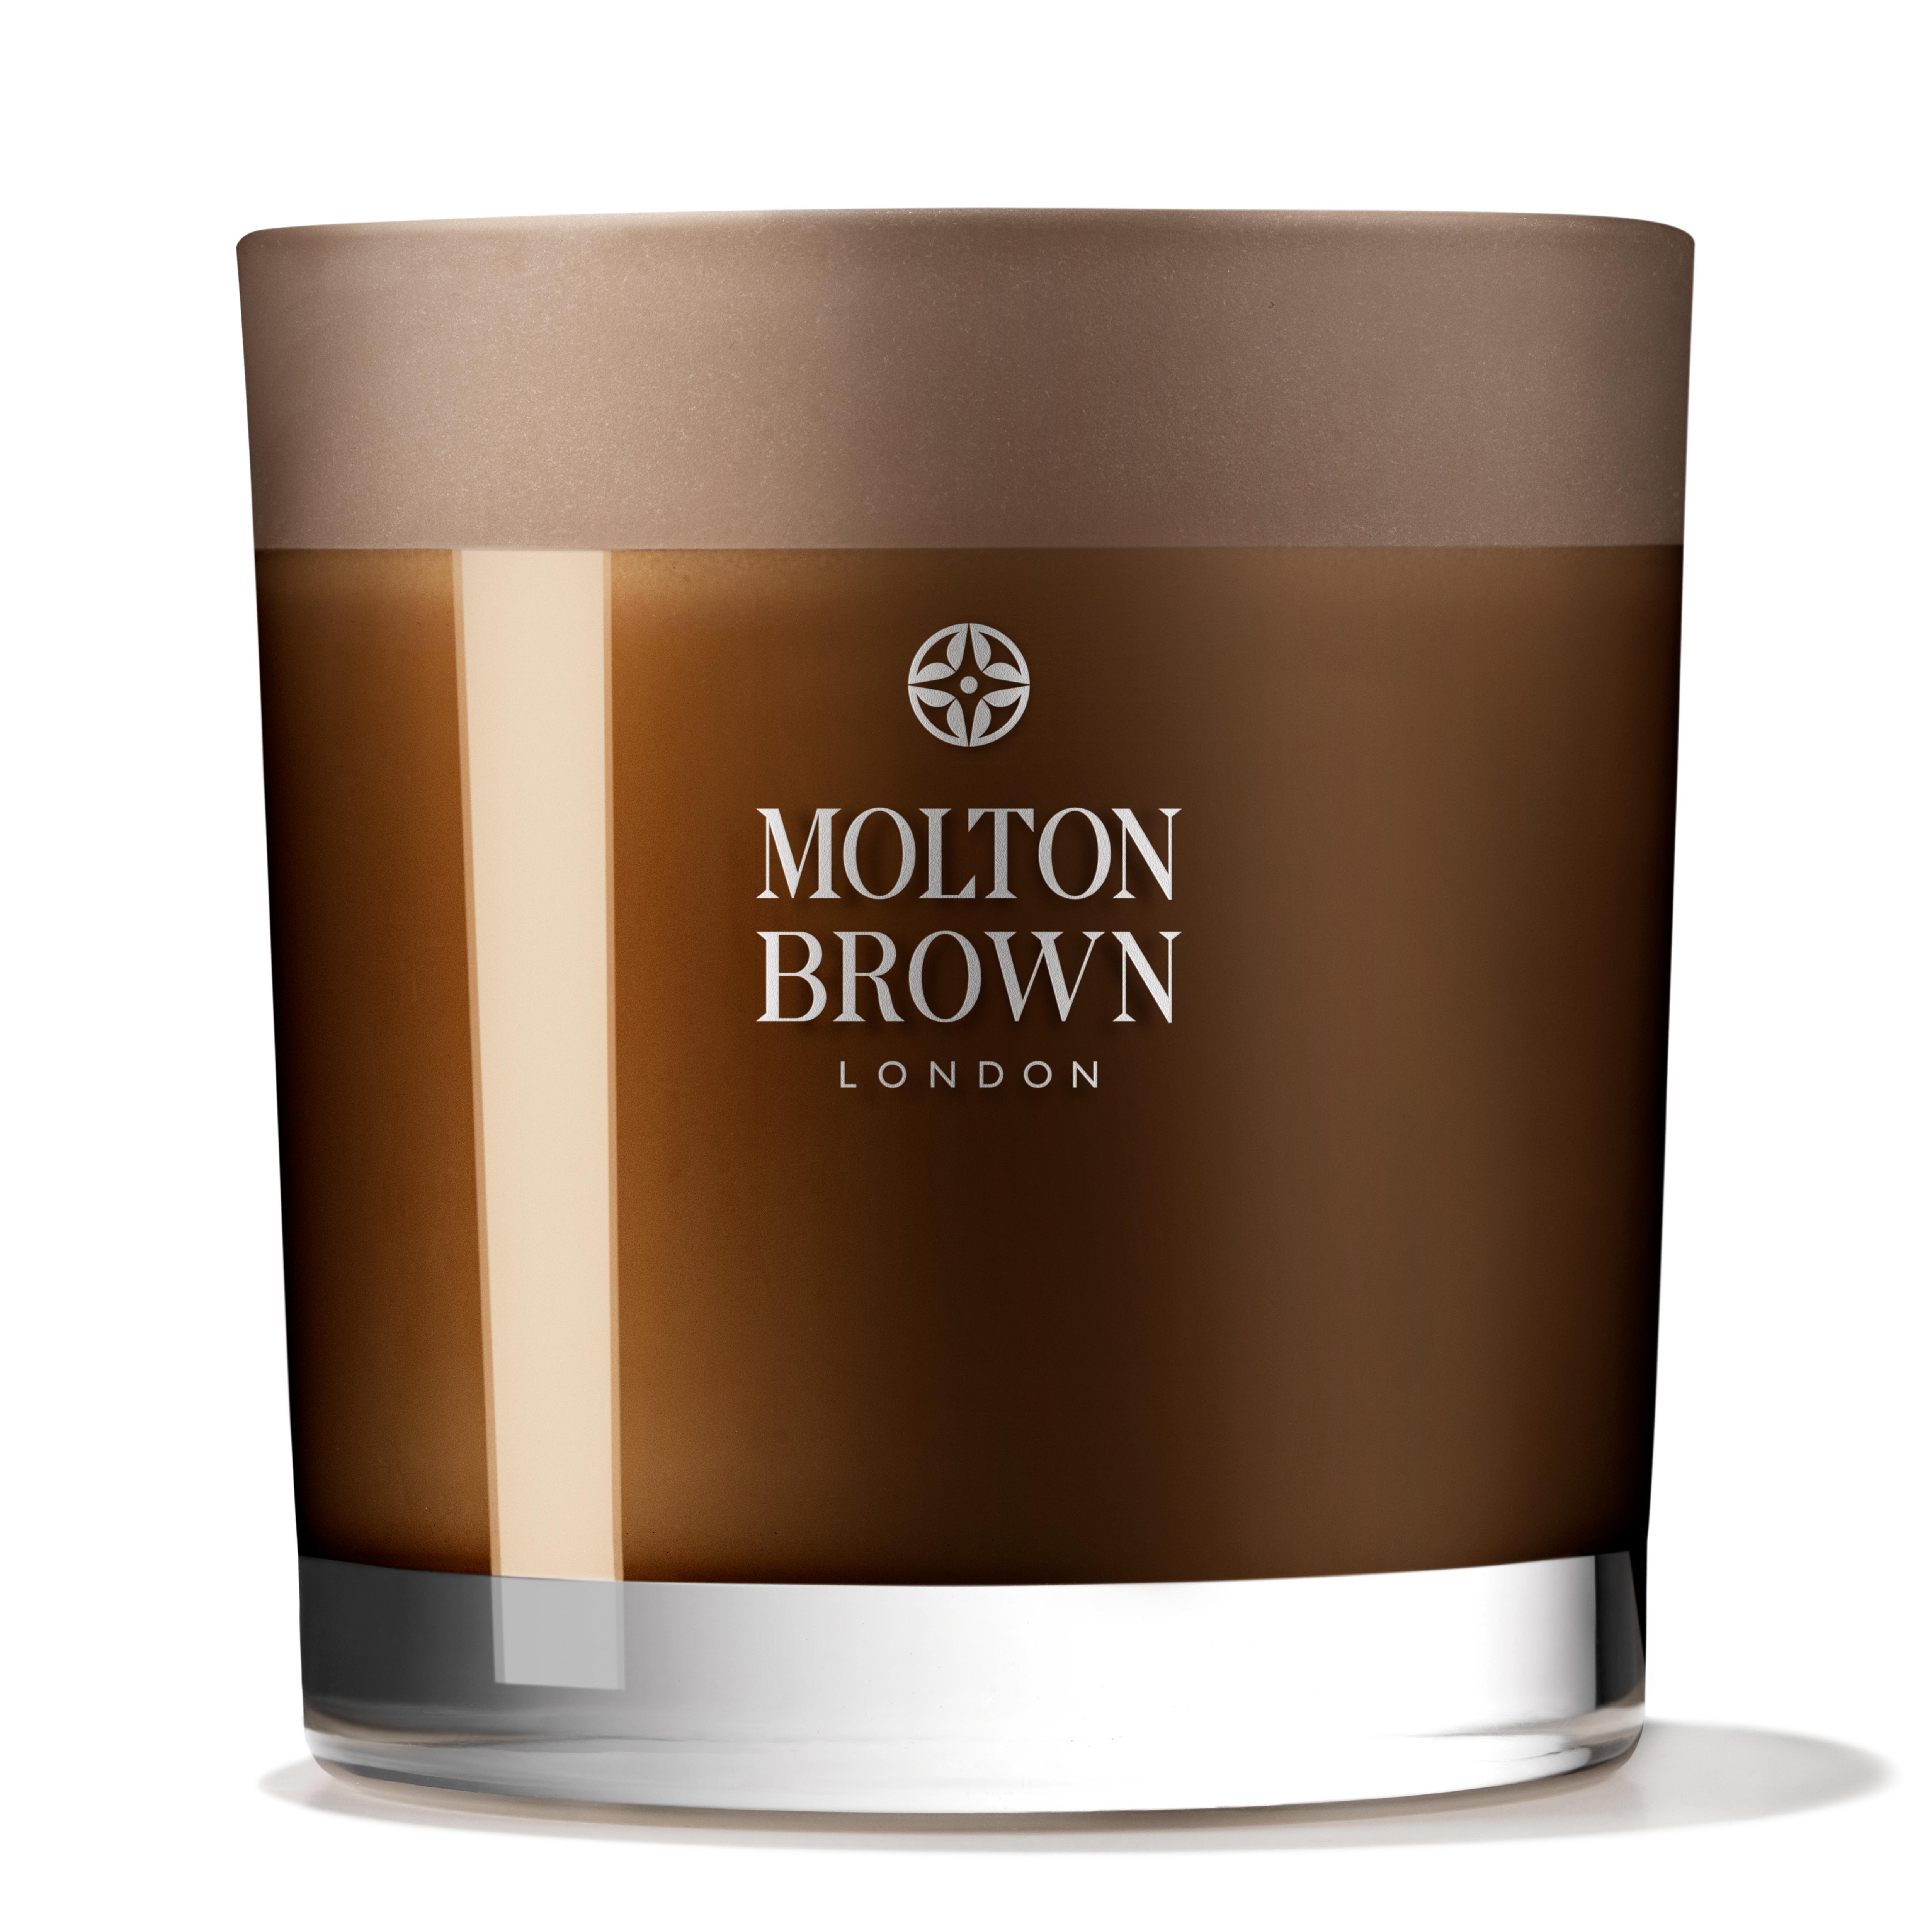 MOLTON BROWN SET 6 FRAGRANCED VOTIVE CANDLES 6 x 30G Brand New